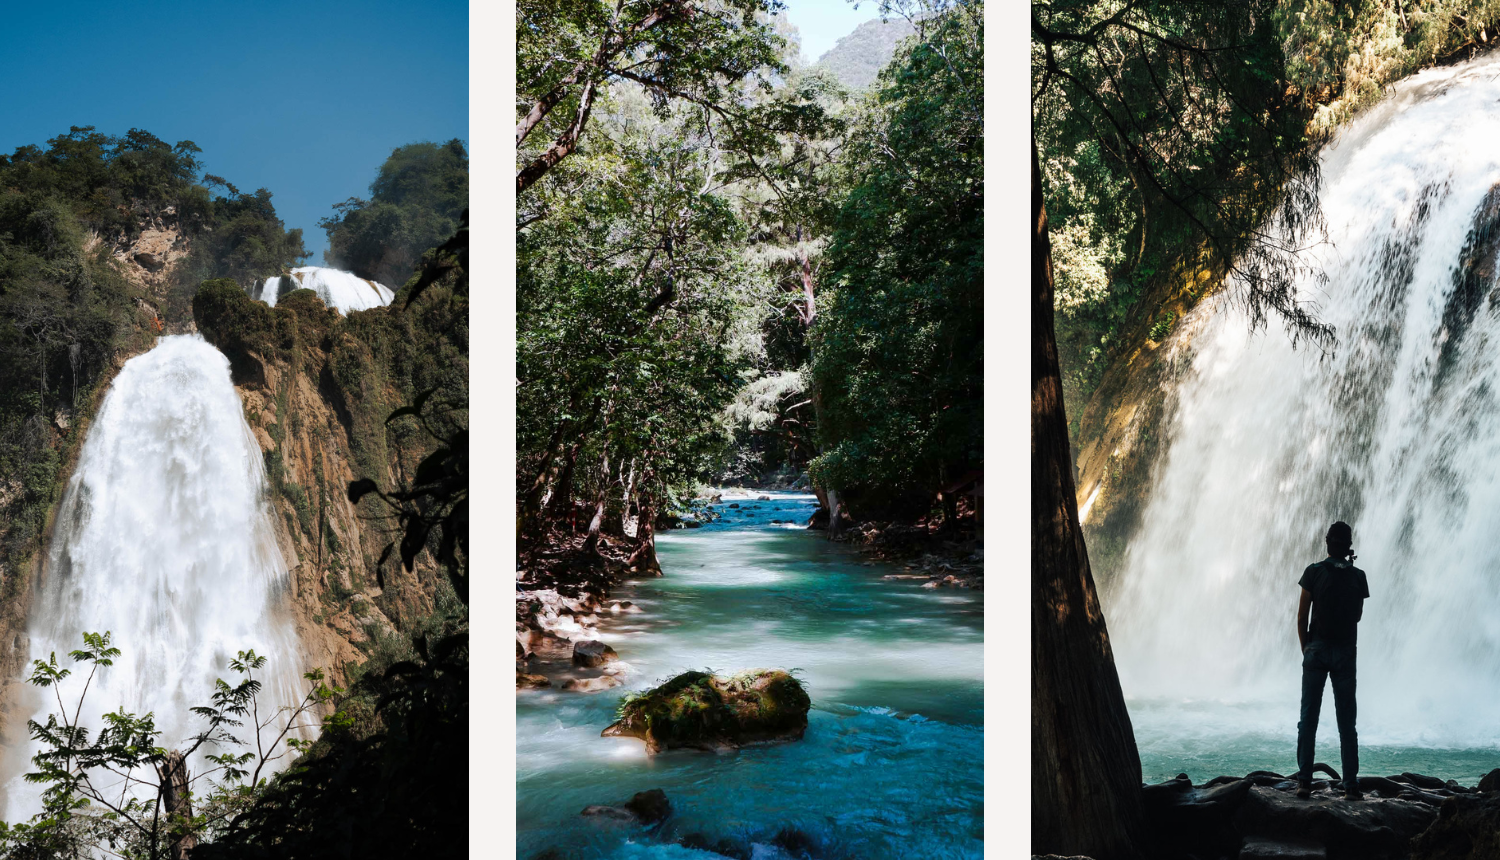 Waterfalls El Chiflon, Chiapas, one of the biggest waterfalls of the state